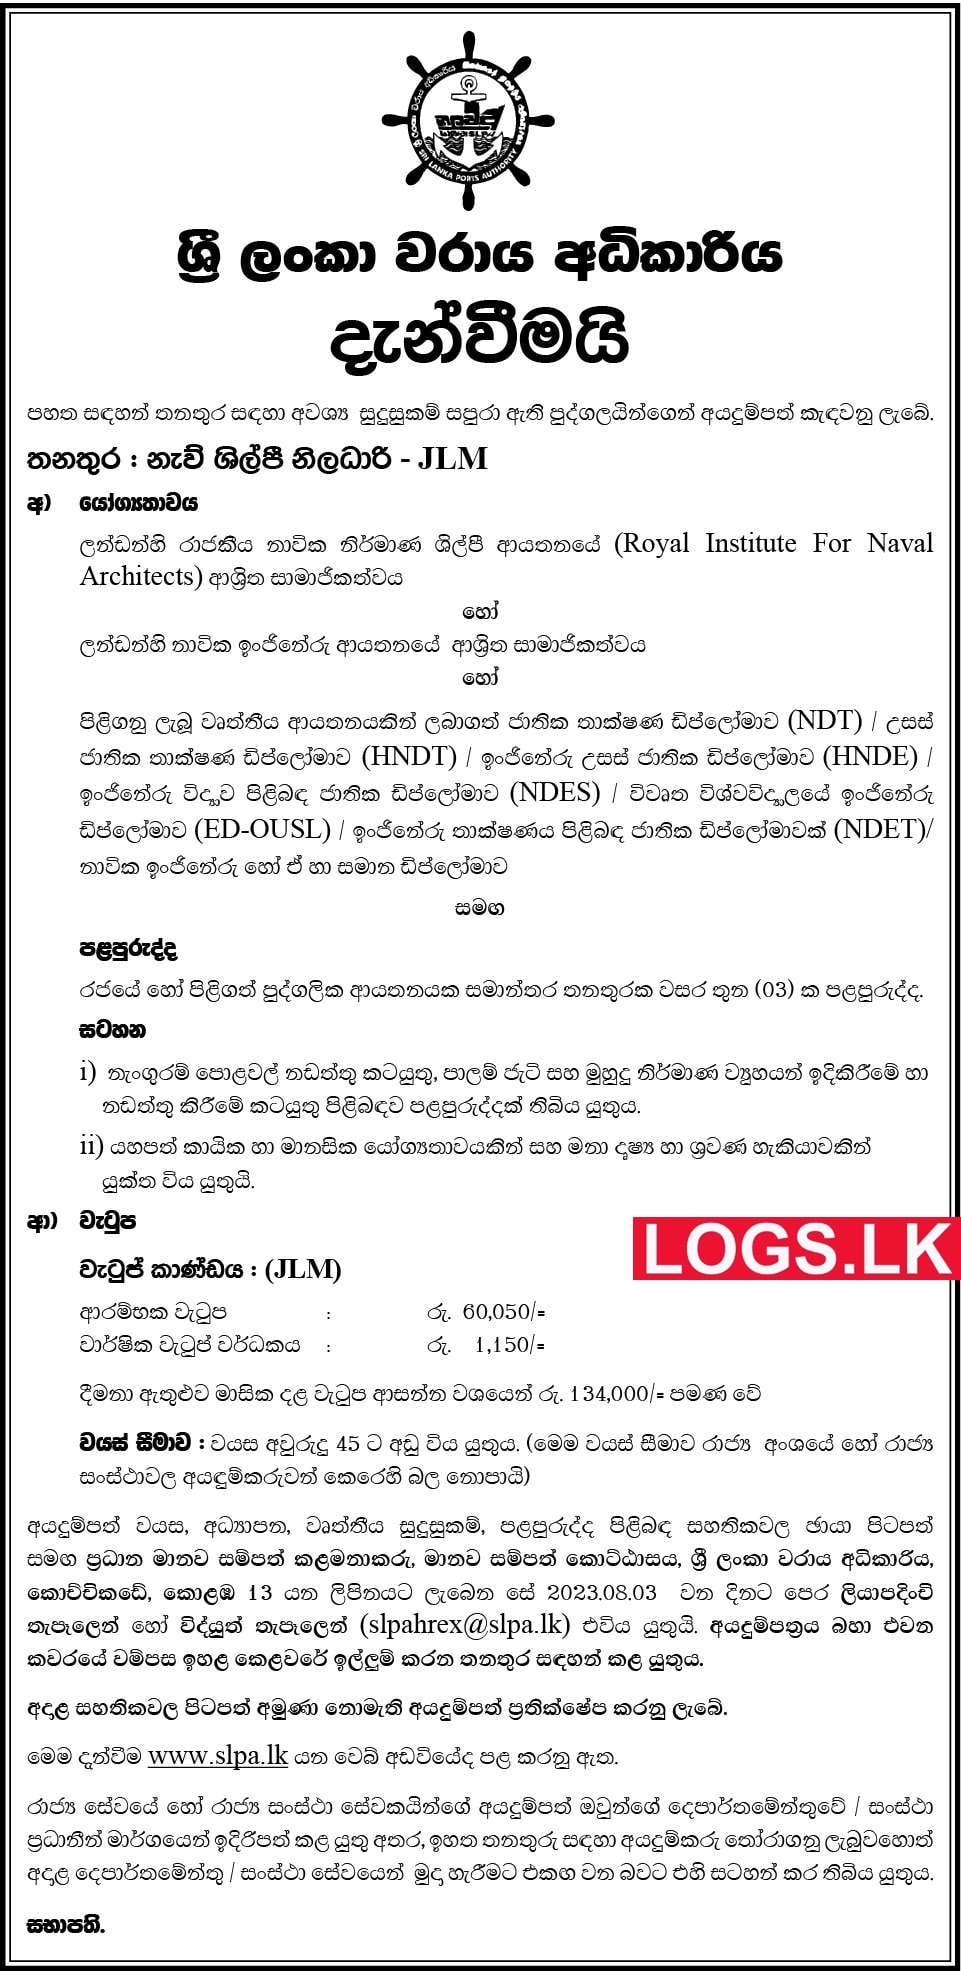 Shipwright Officer - Sri Lanka Ports Authority Job Vacancies 2023 Application FOrm, Details Download